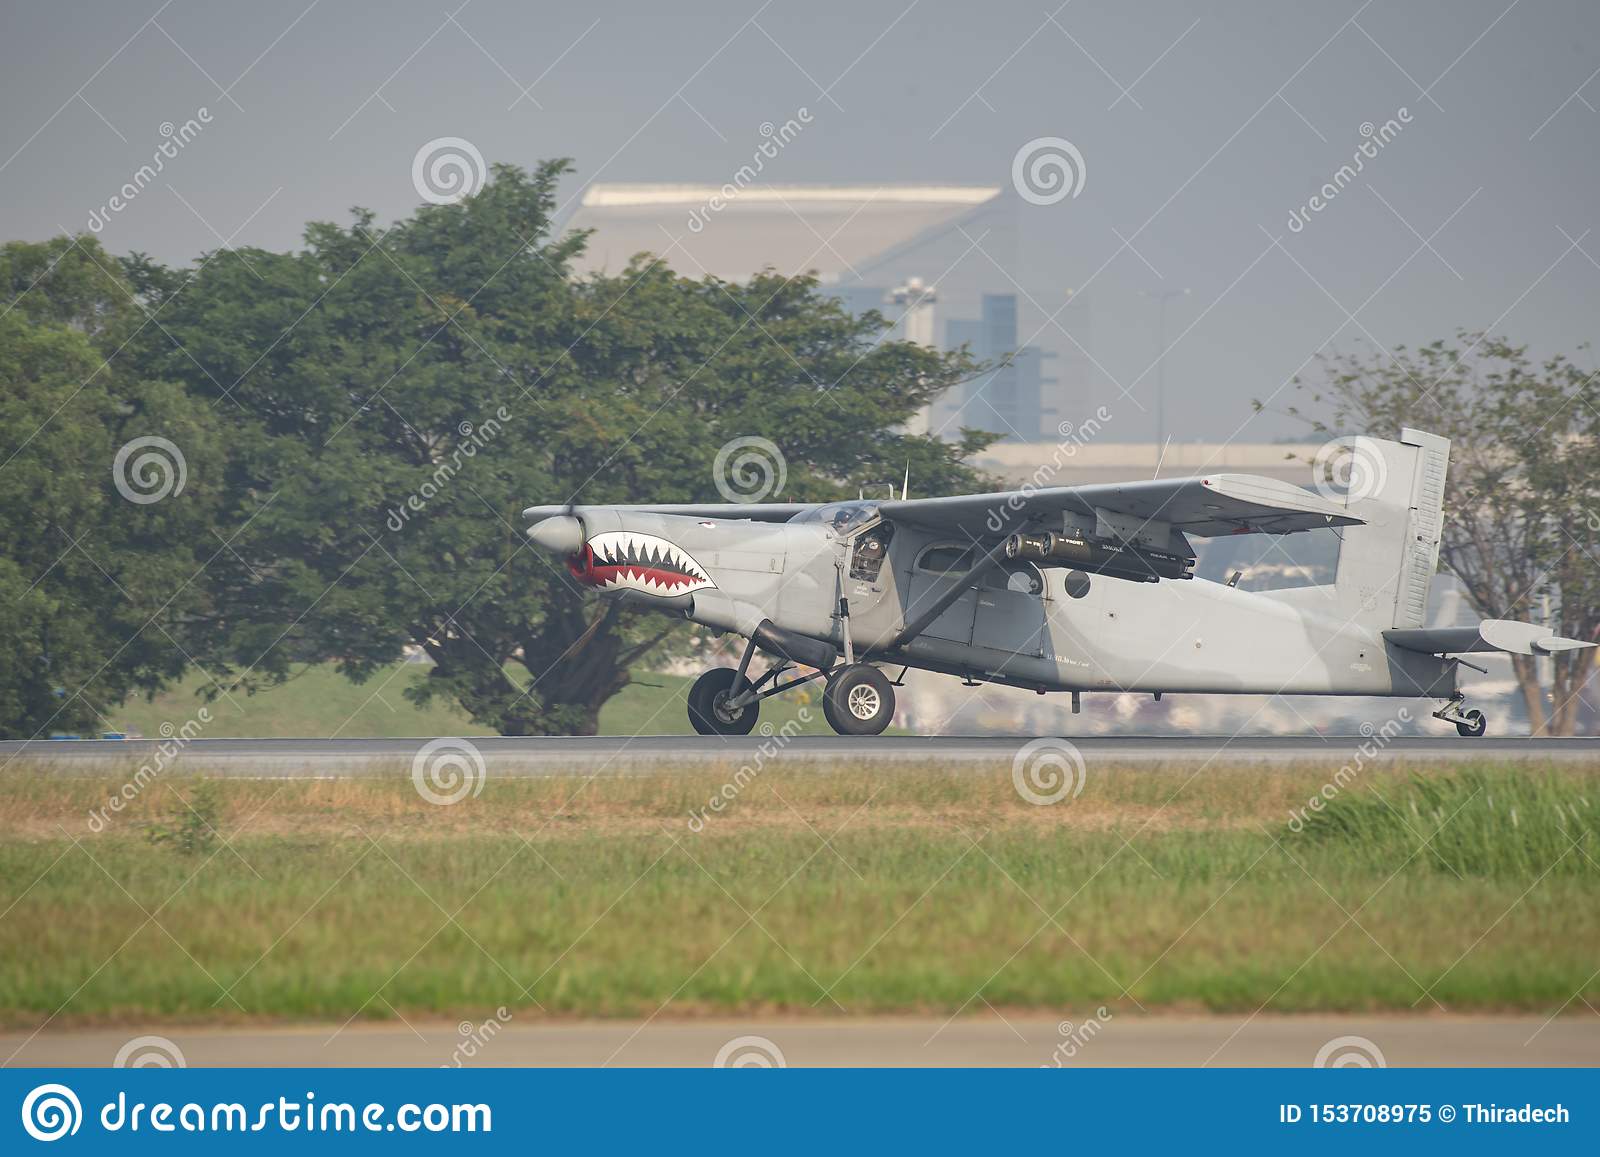 Pilatus PC-6 light-aircraft-pilatus-pc-flight-training-153708975.jpg